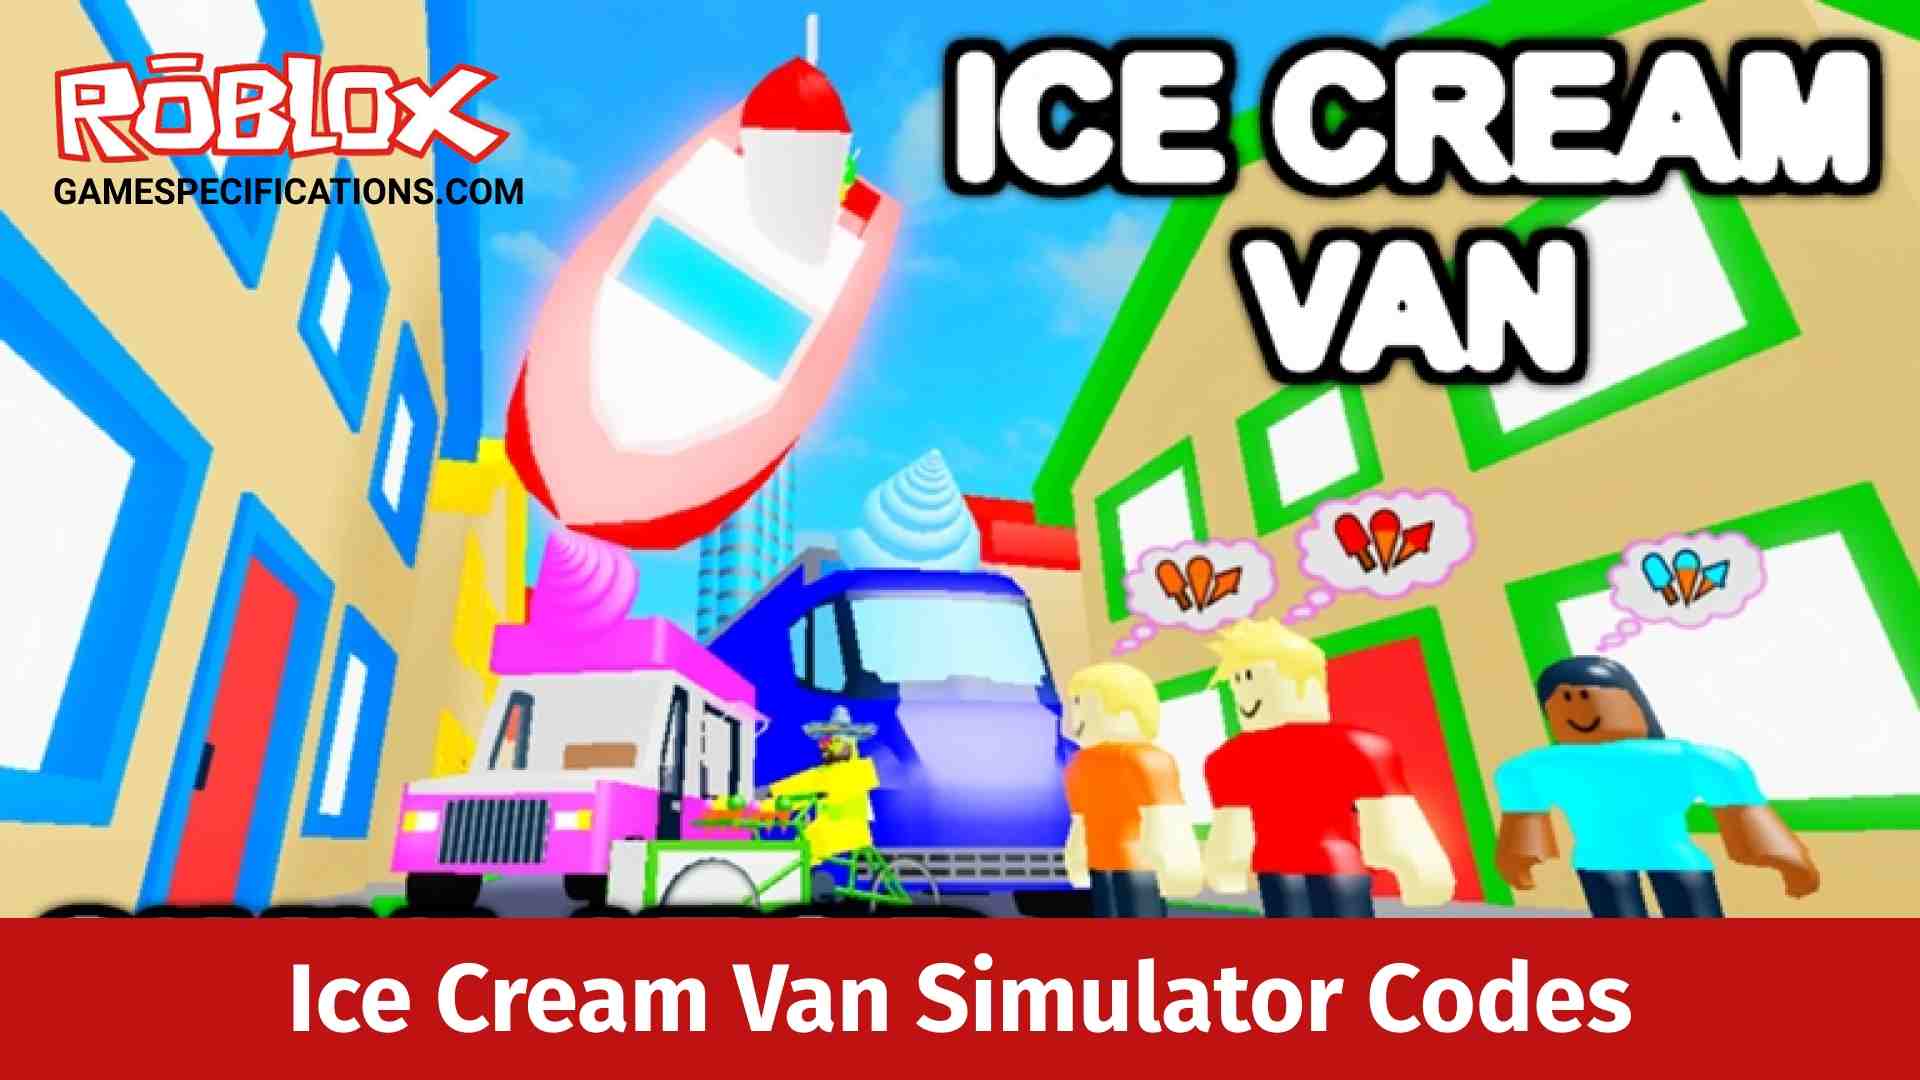 70 Working Roblox Ice Cream Van Simulator Codes 2021 Game Specifications - uno roblox music id